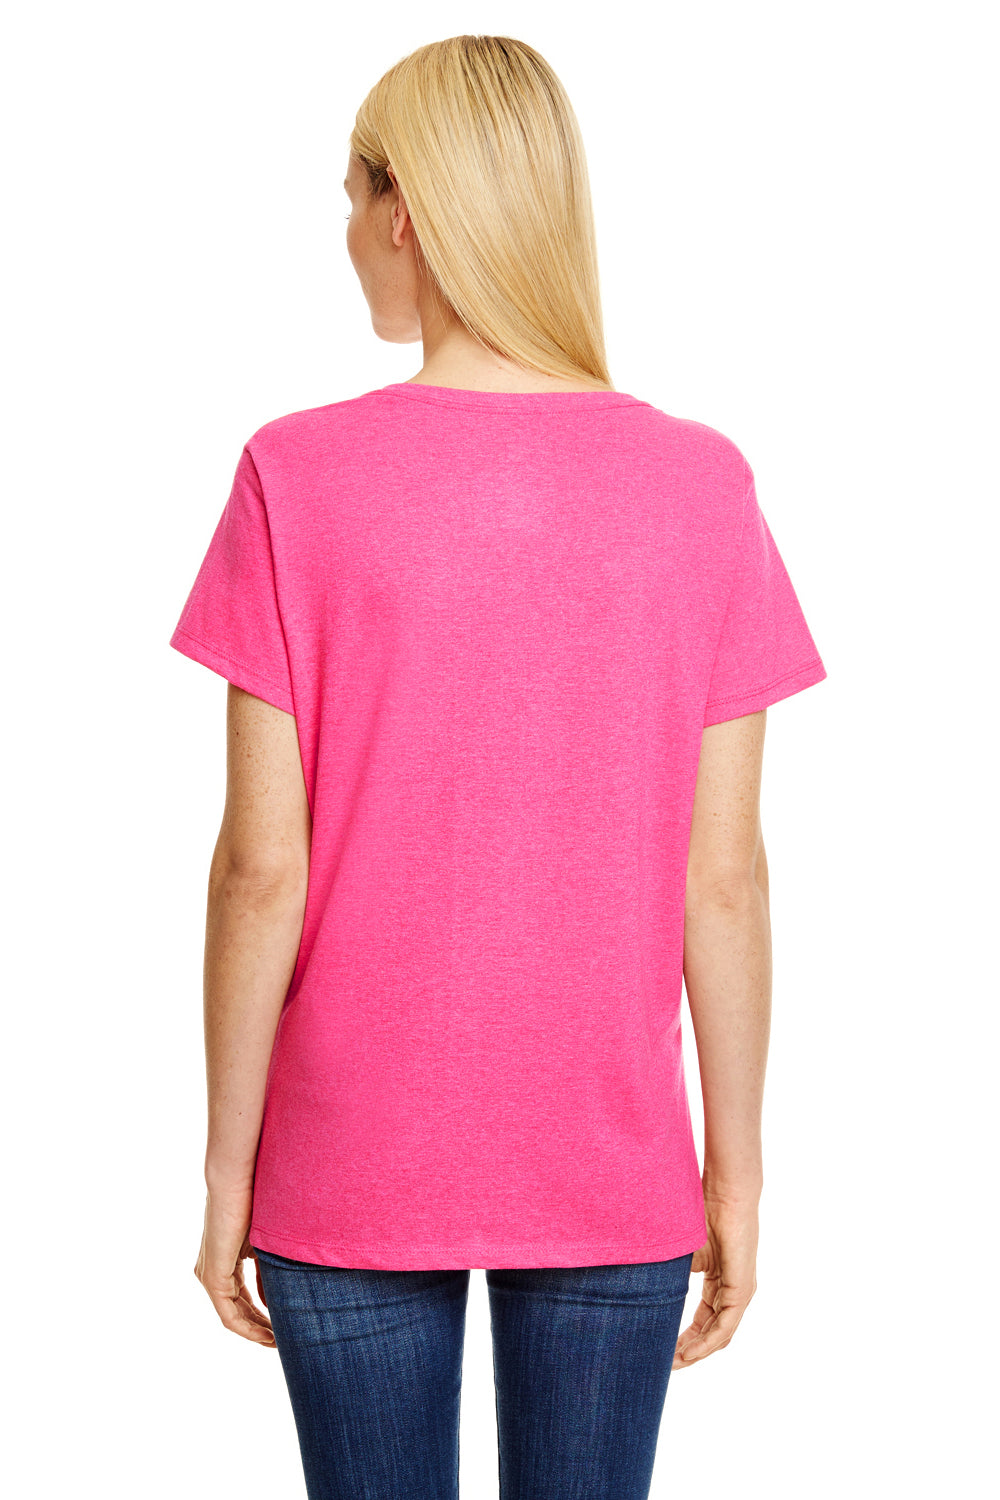 Hanes 42VT Womens X-Temp FreshIQ Moisture Wicking Short Sleeve V-Neck T-Shirt Pink Back